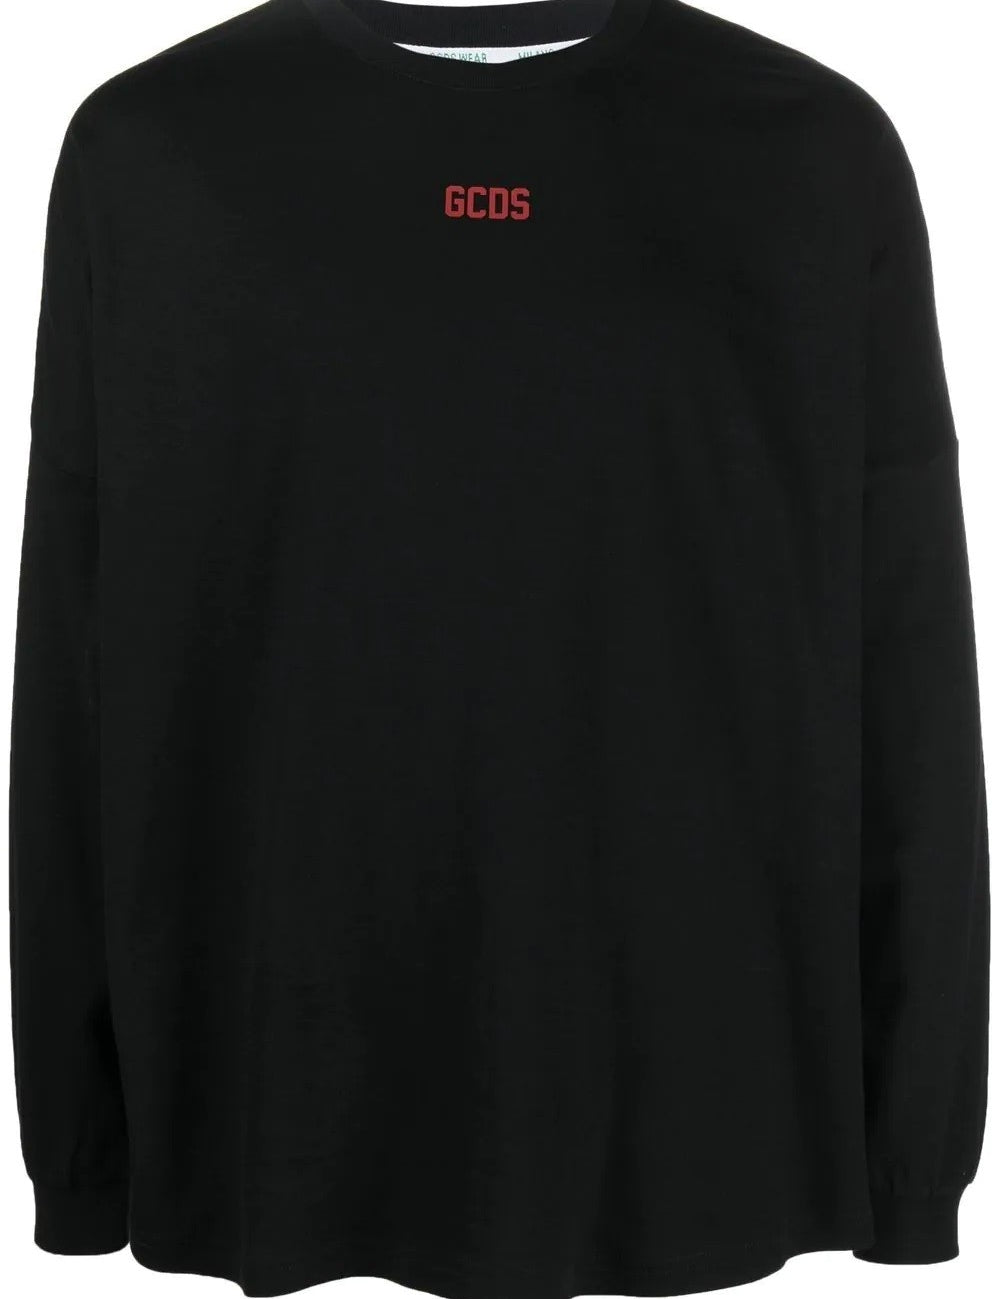 eco-basic-logo-sweatshirt.jpg